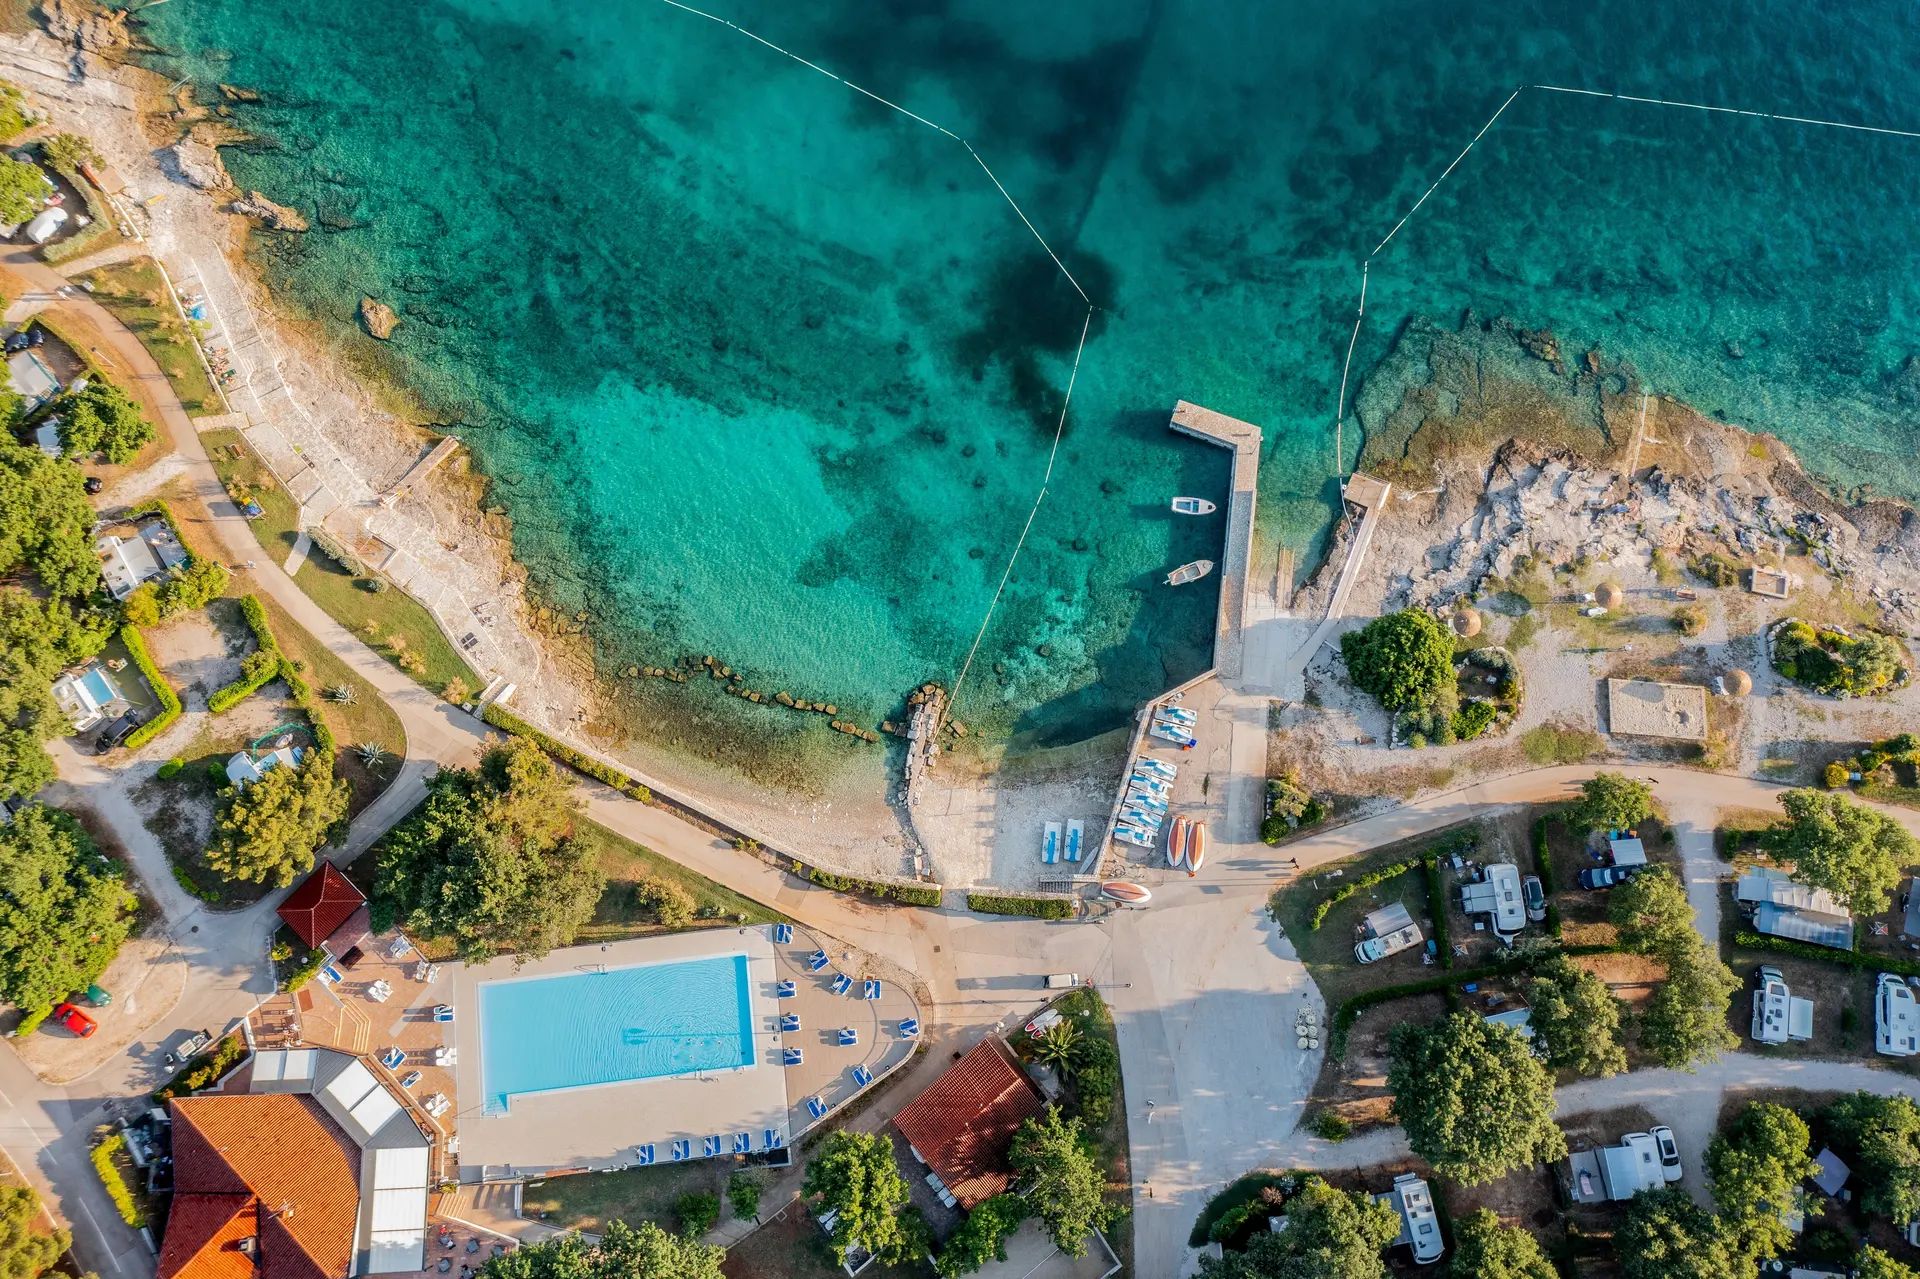 Camping Solaris - a nice campsite by the sea in Croatia